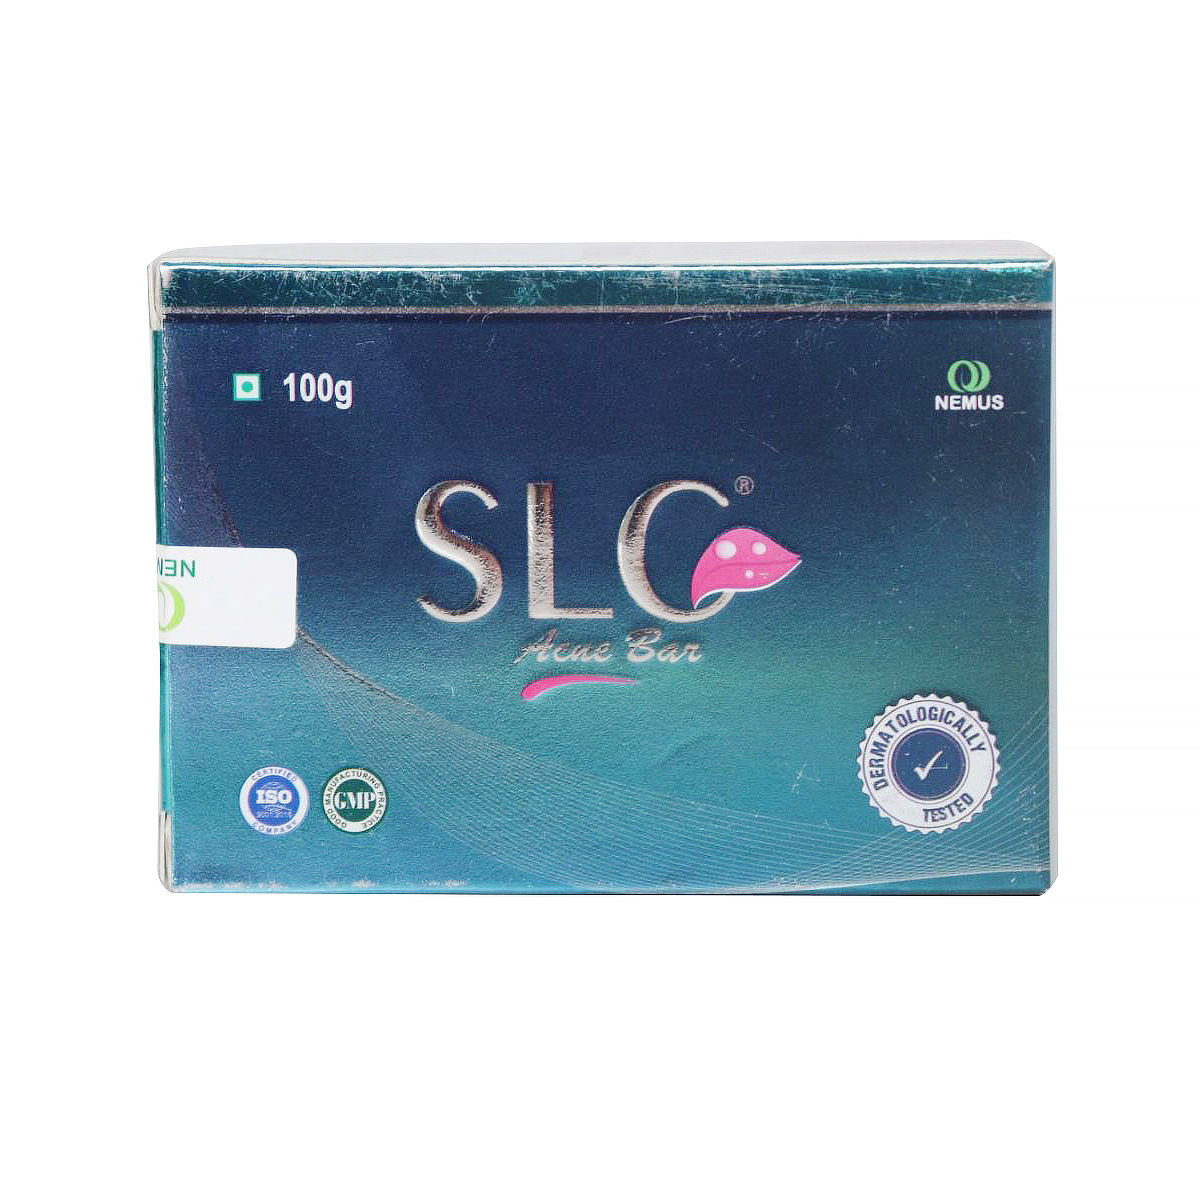 SLC Acne Bar, 100 gm, Pack of 1 